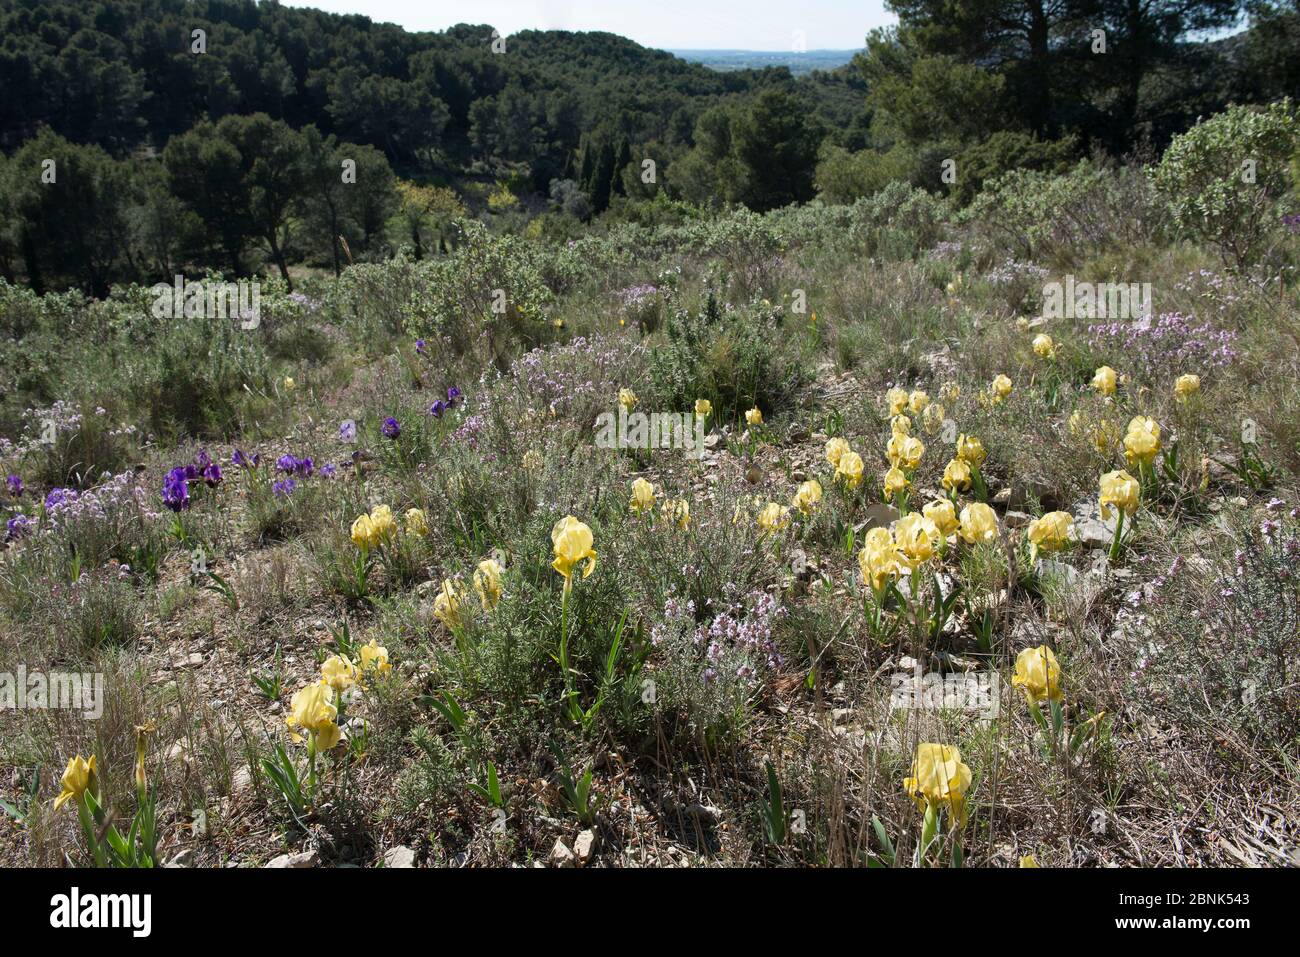 Crimean iris (Iris chamaeiris) flowering in garrigue habitat, Eyguieres, Alpilles, France. April. Stock Photo